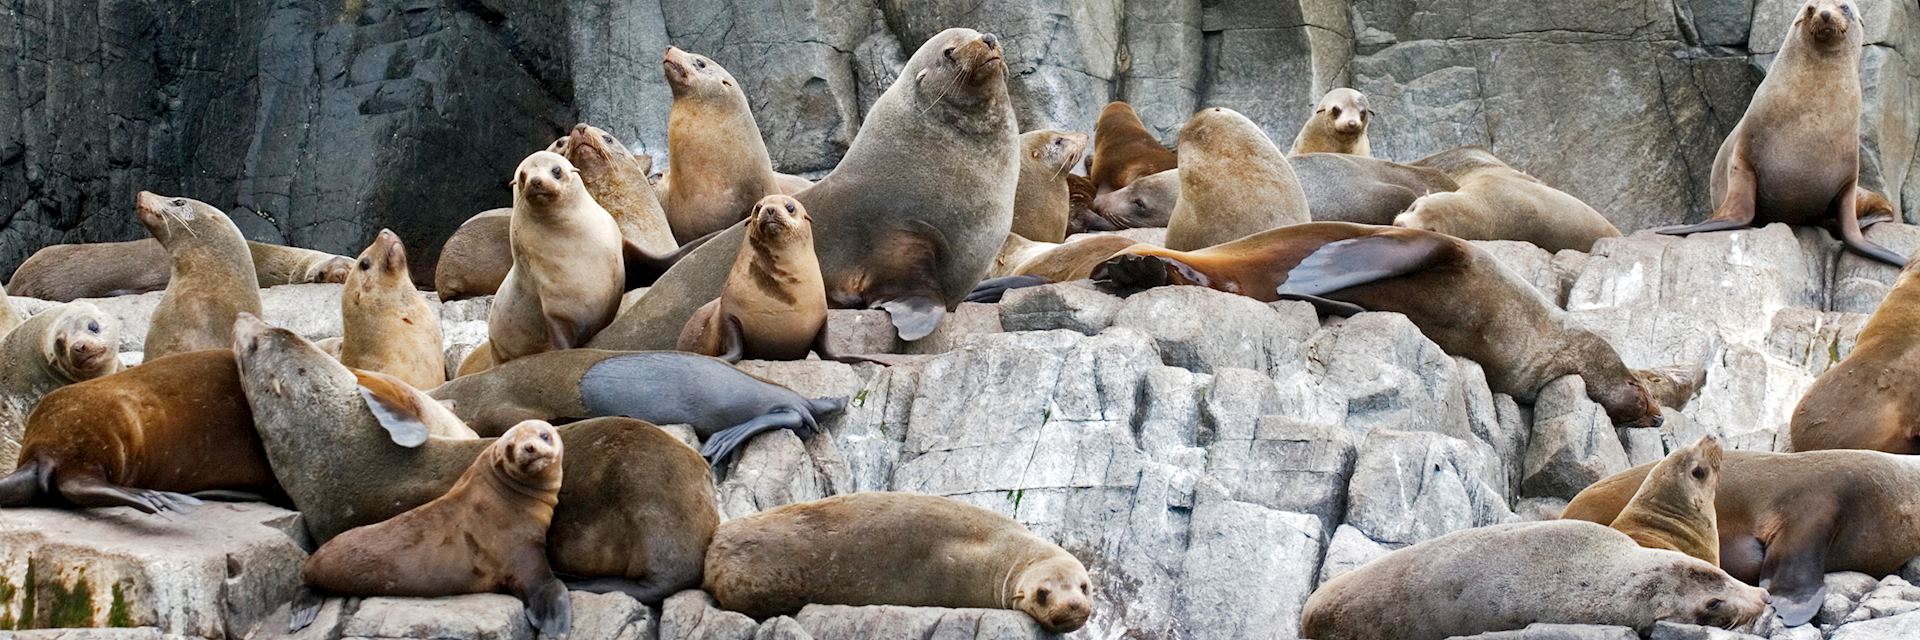 Fur seals, Bruny Island